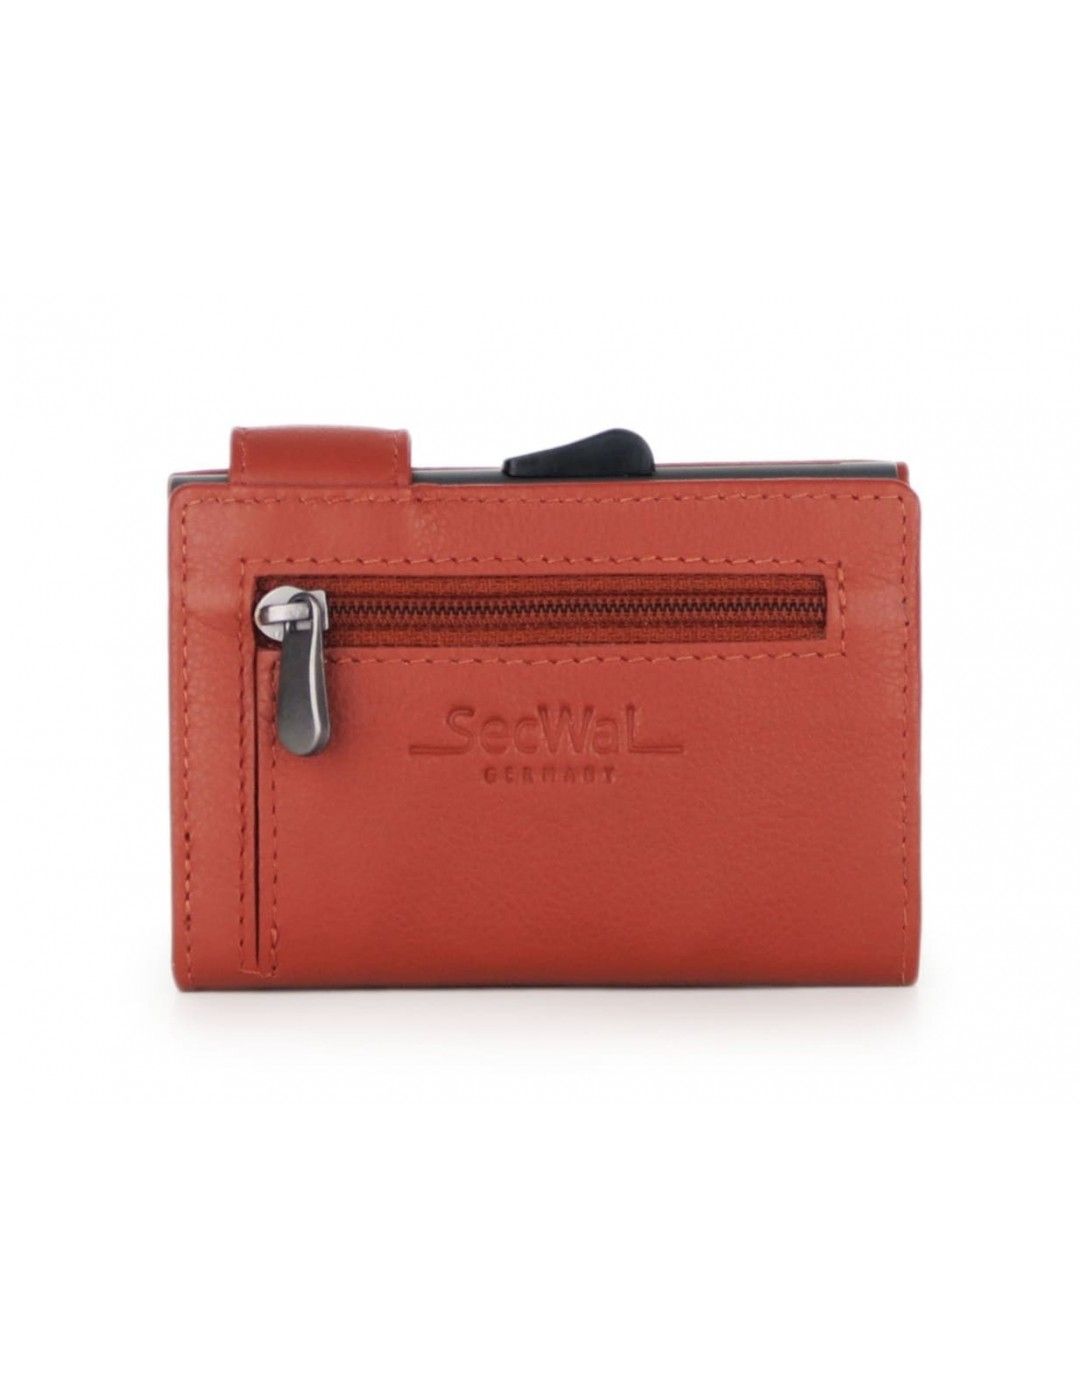 Porte-cartes SecWal RV Leather orange